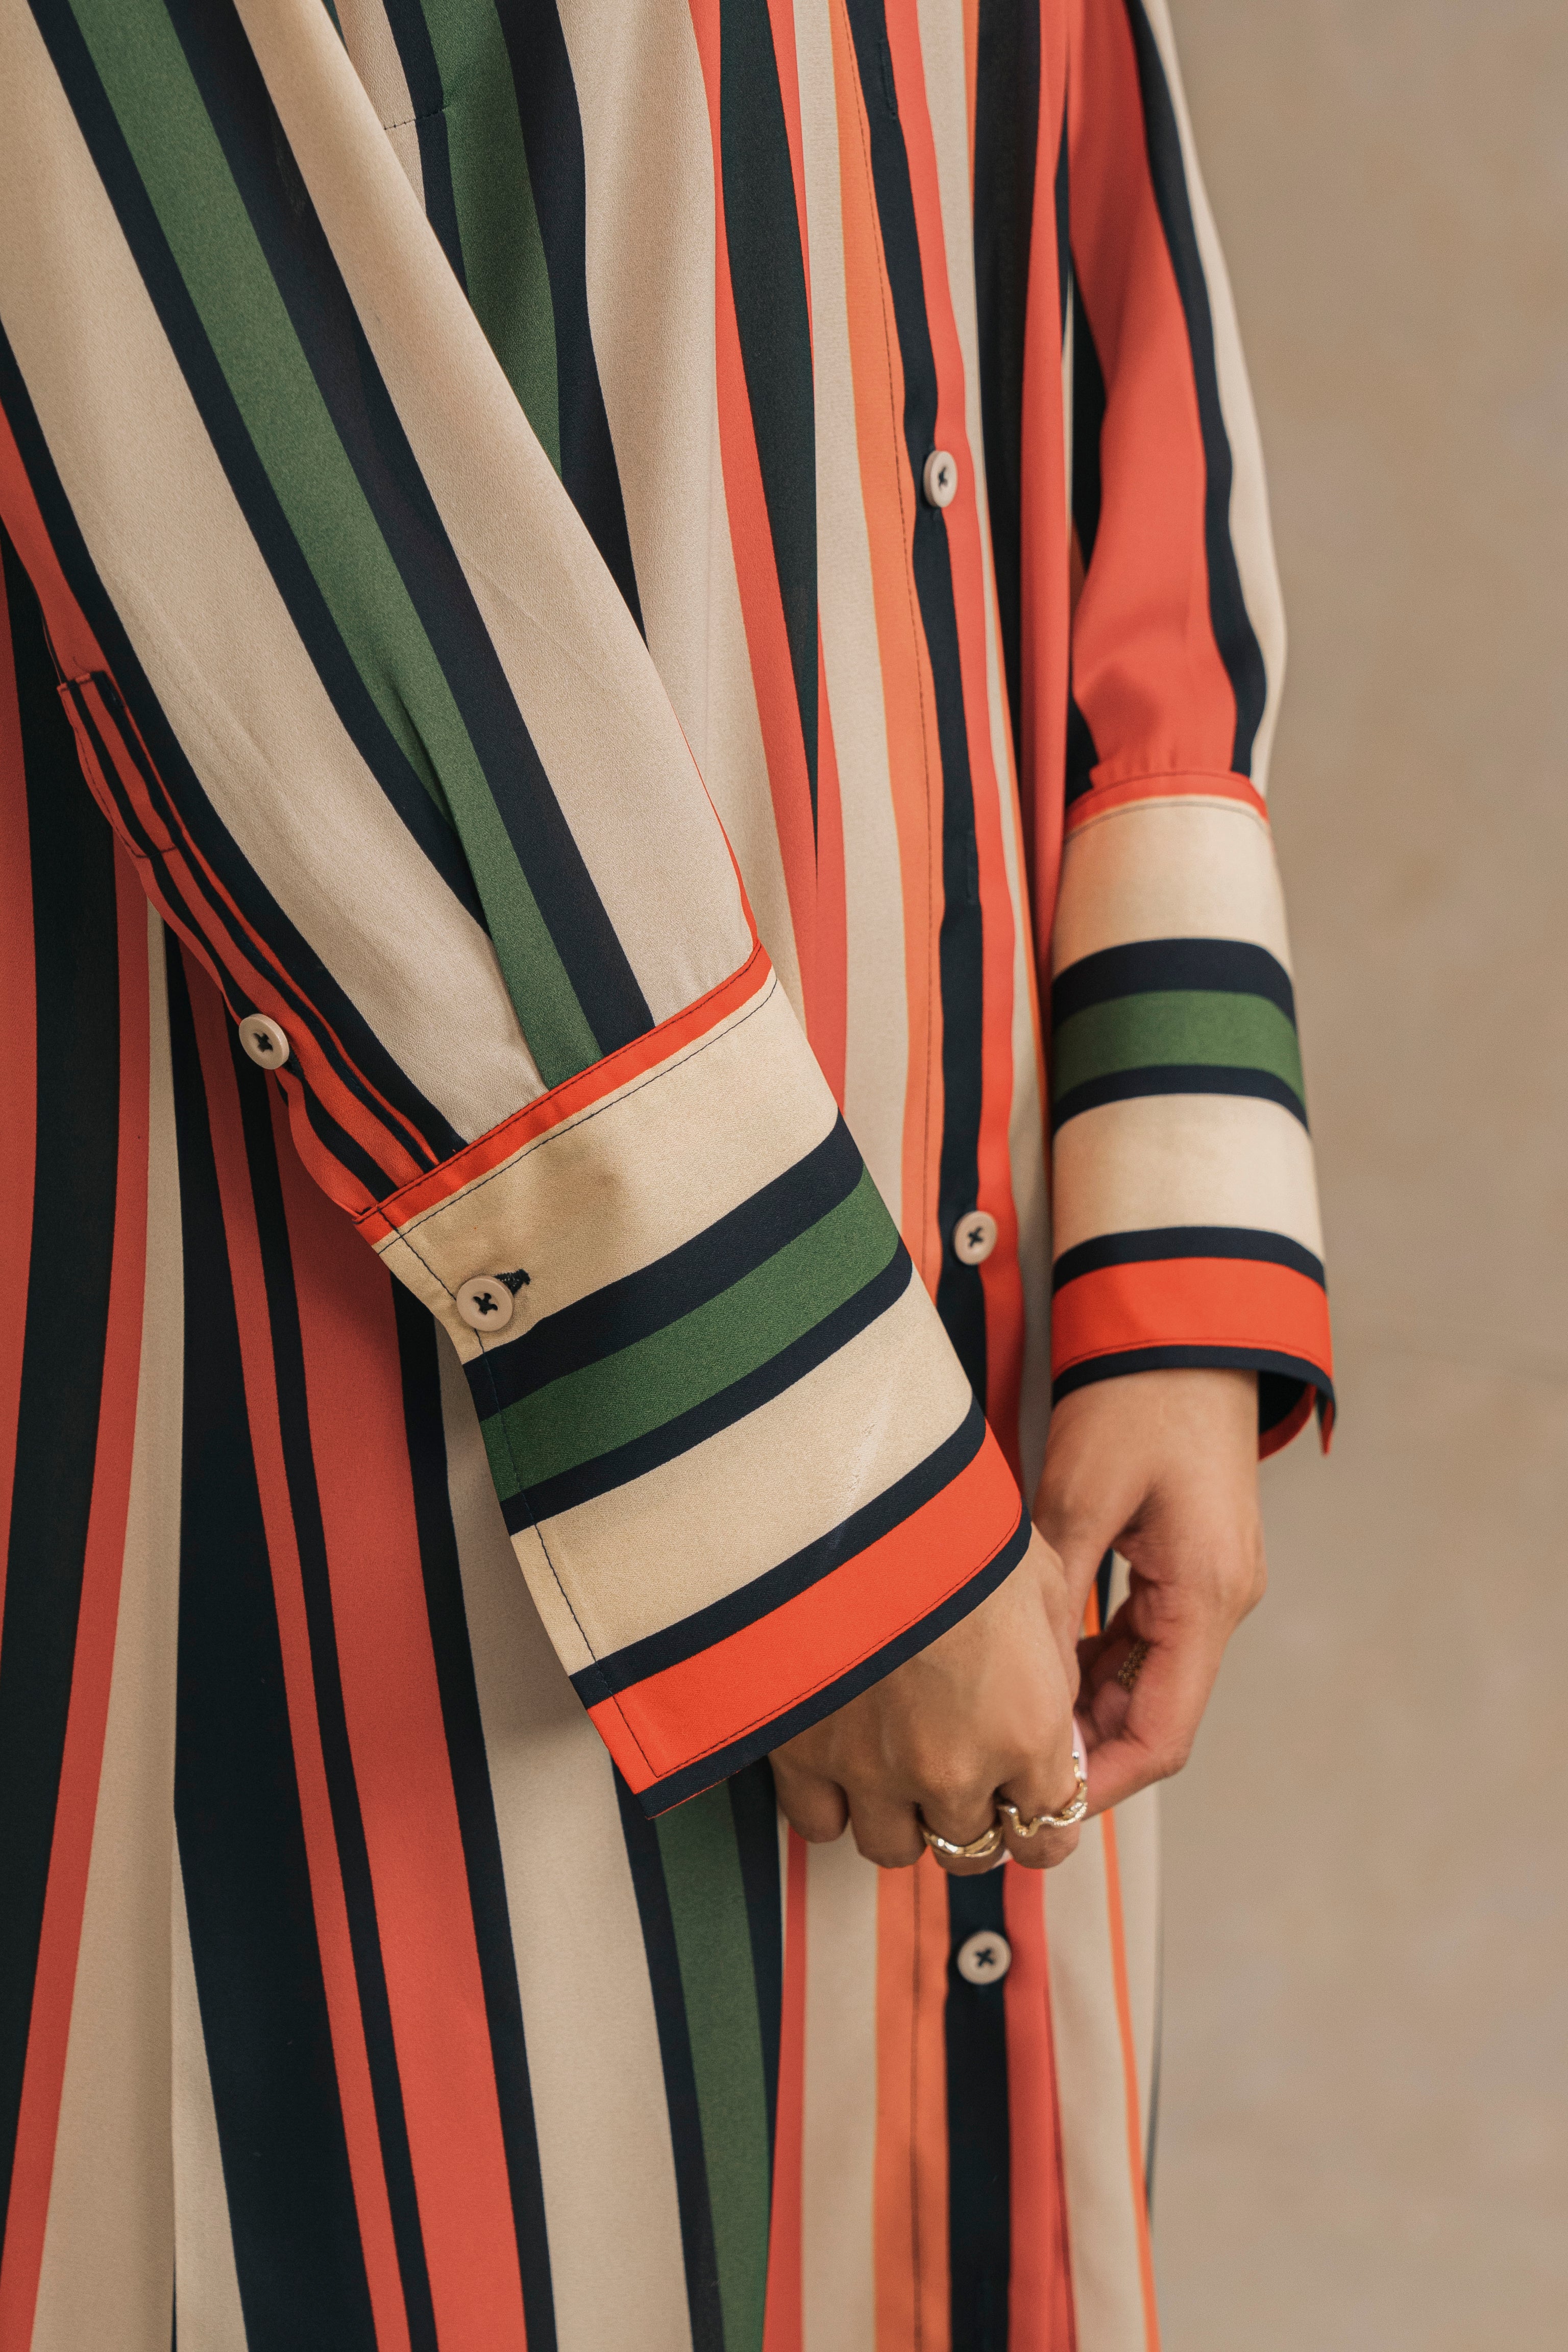 Multi Color Striped Shirt Dress in Pakistan